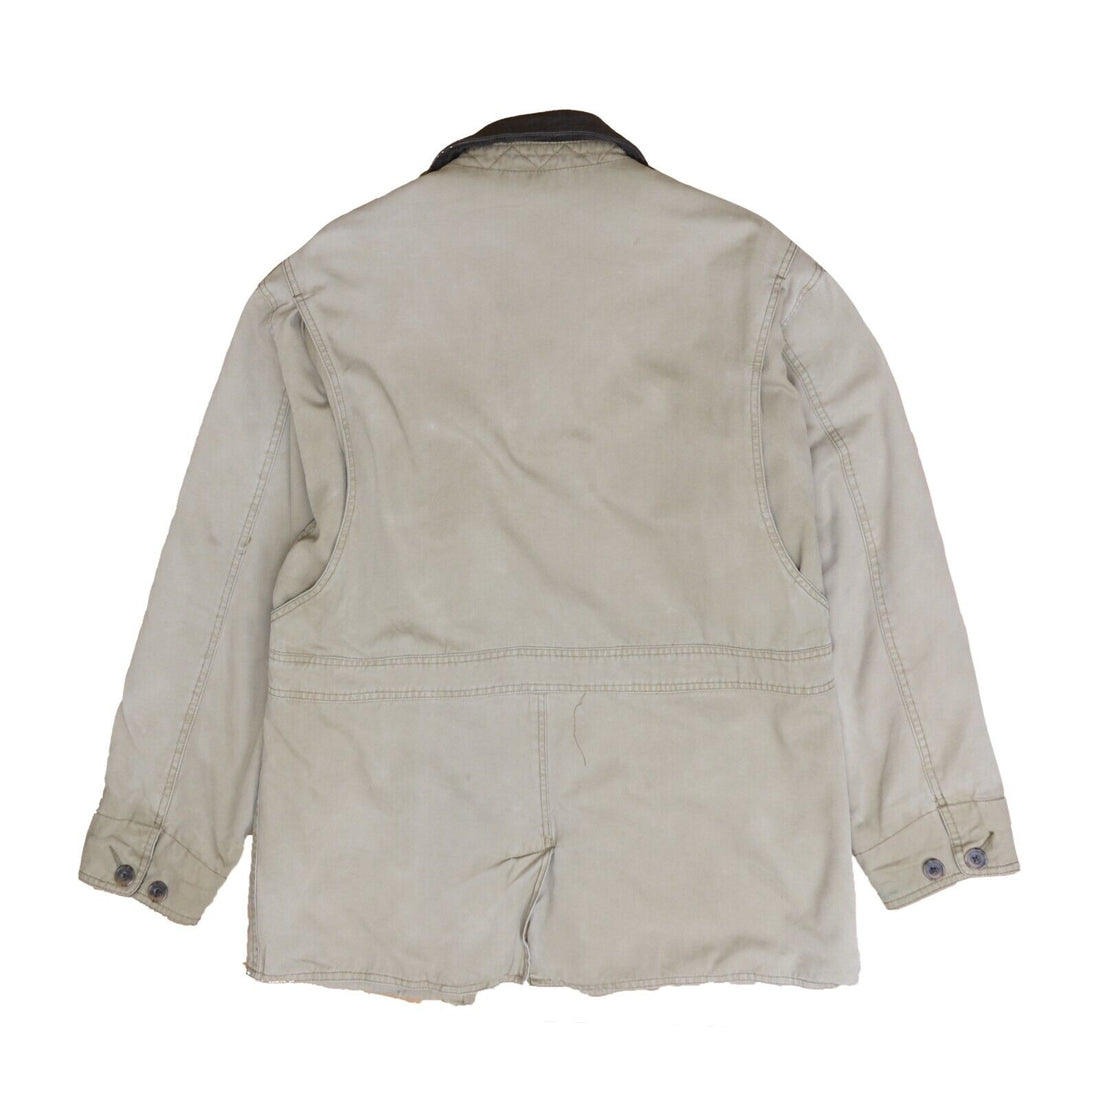 Vintage Gap Barn Work Coat Jacket Size Medium Beige Plaid Lined Insulated